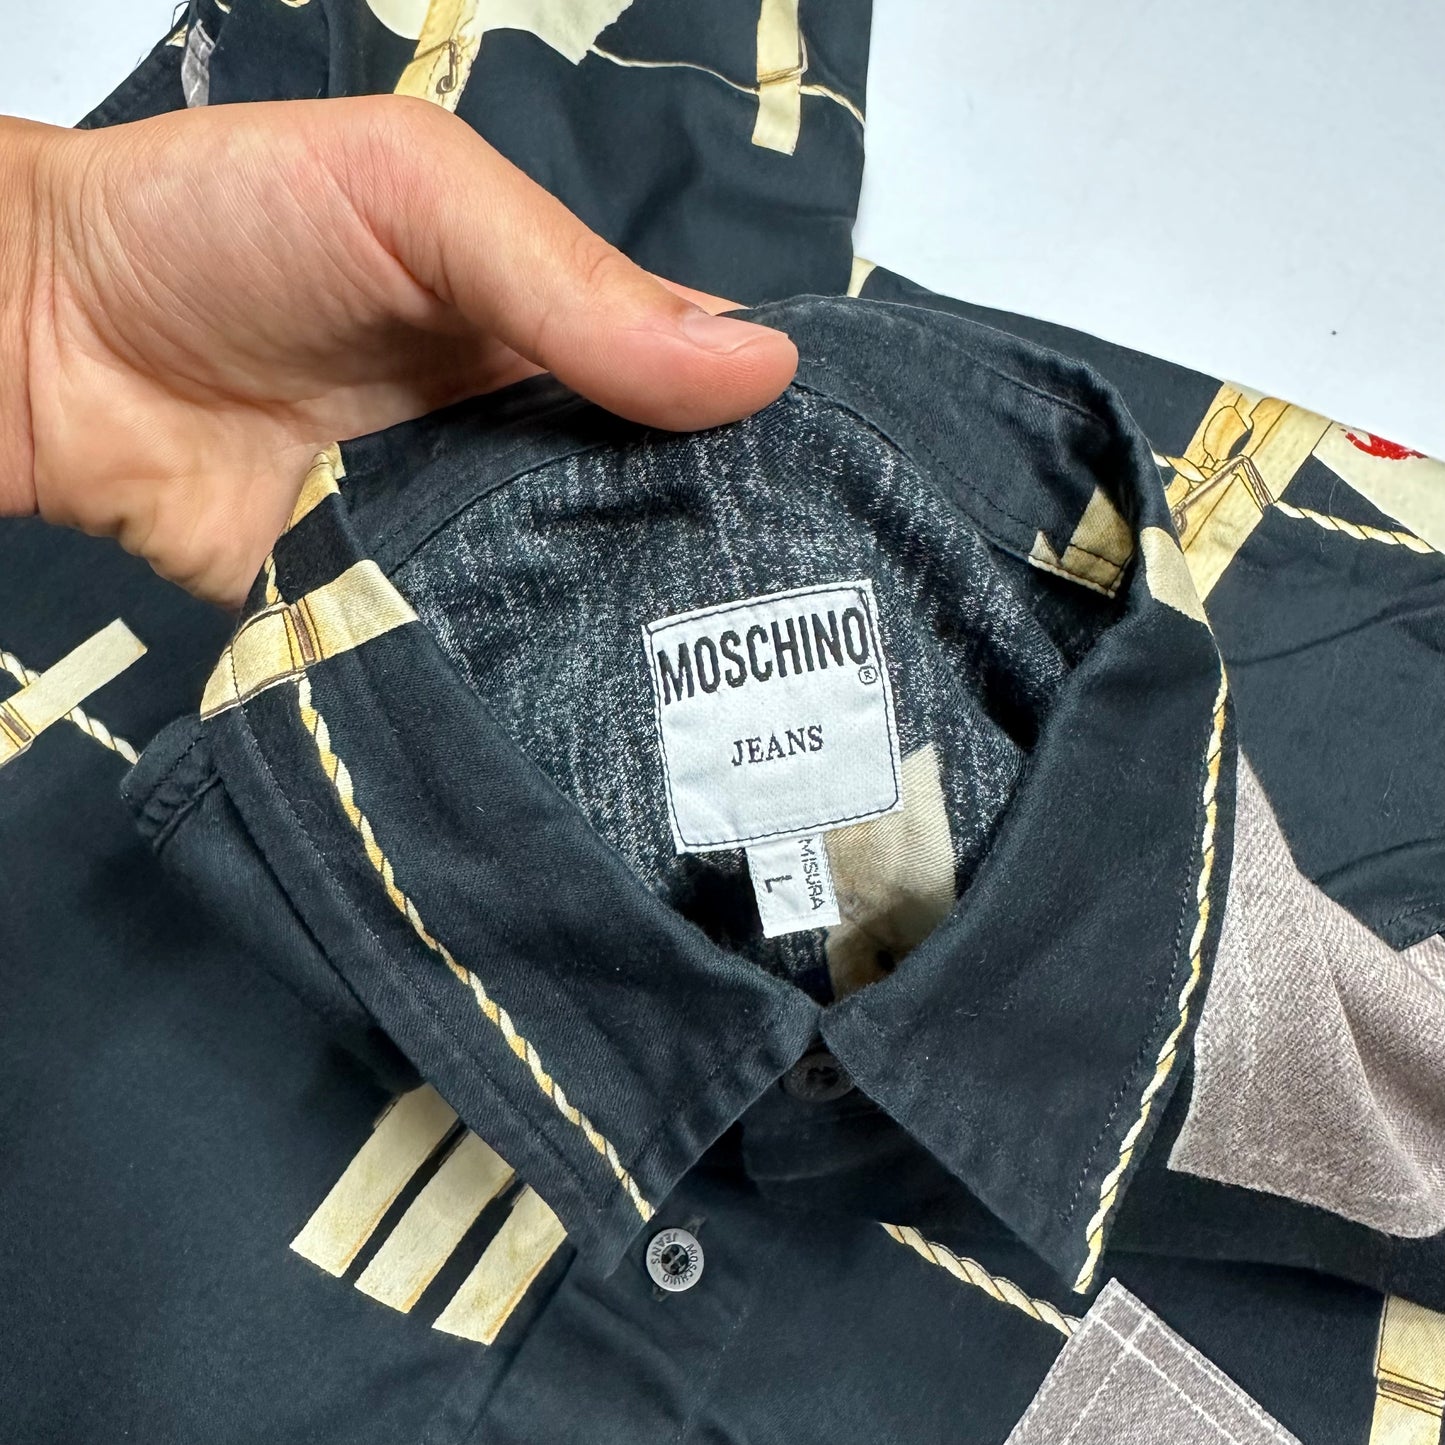 Moschino Jeans 1996 Clothes Peg Shirt - L